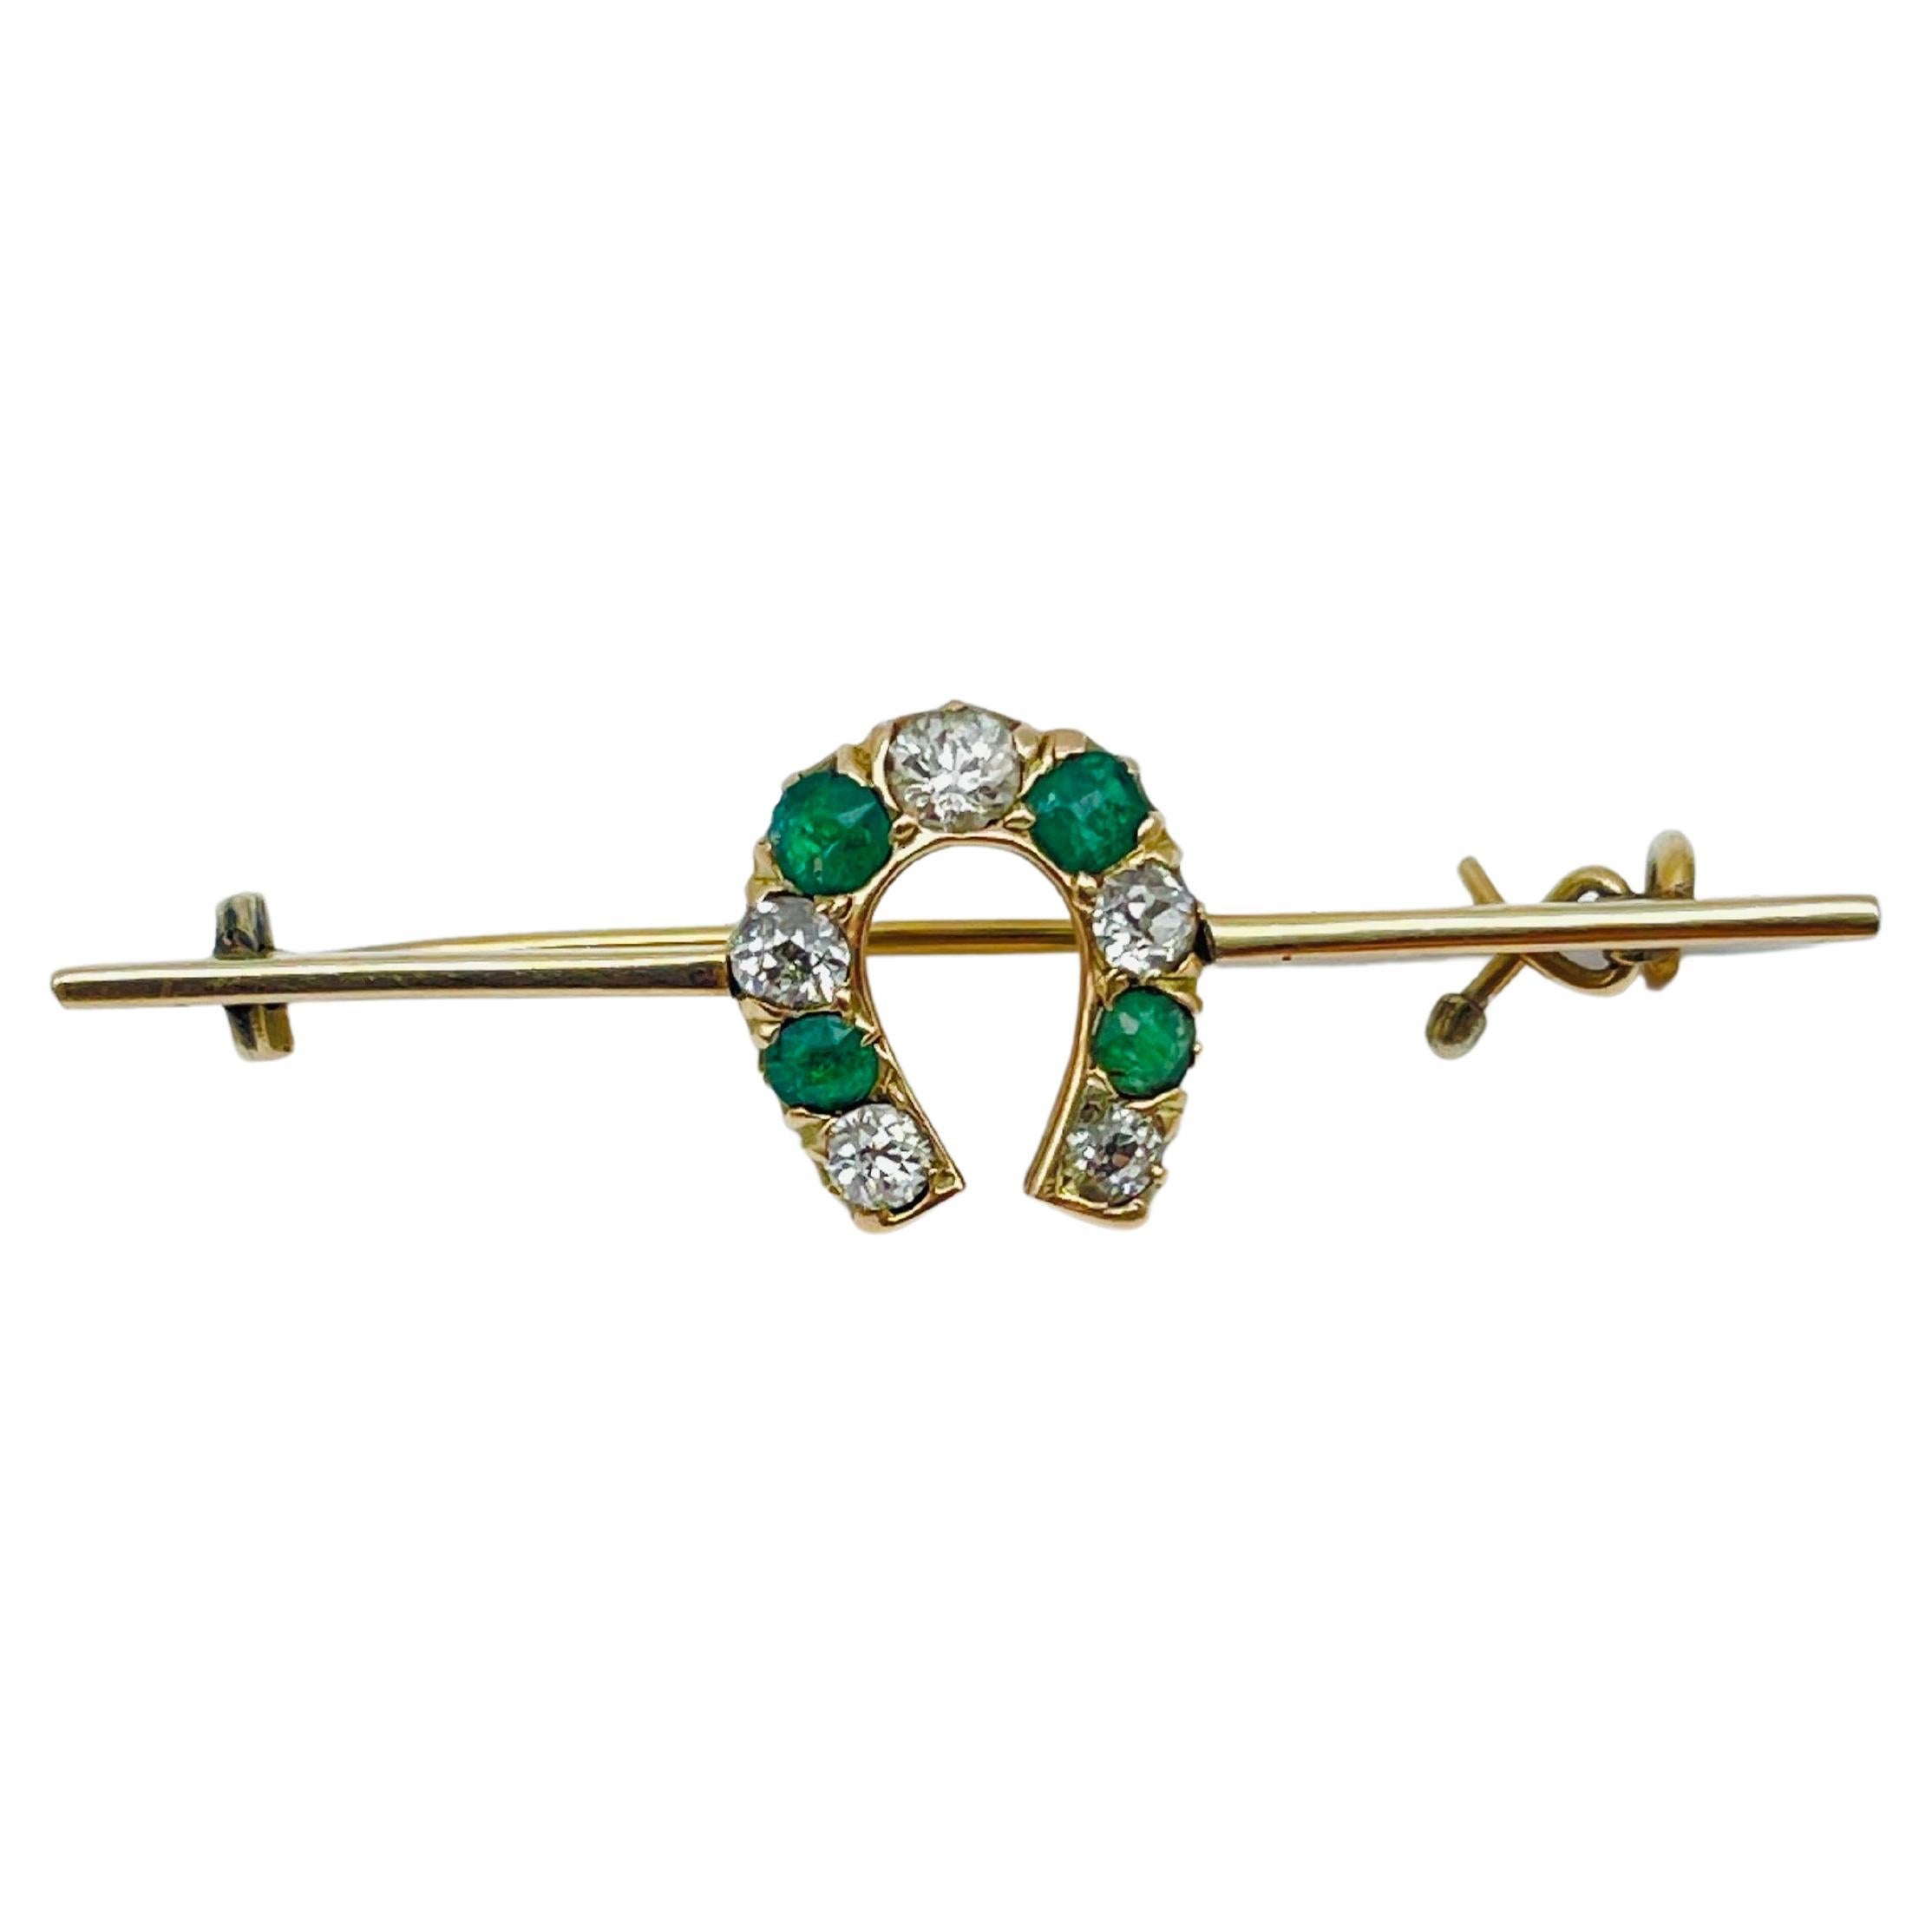 14 Kt Horseshoe Bar Brooch with Diamonds Emerald